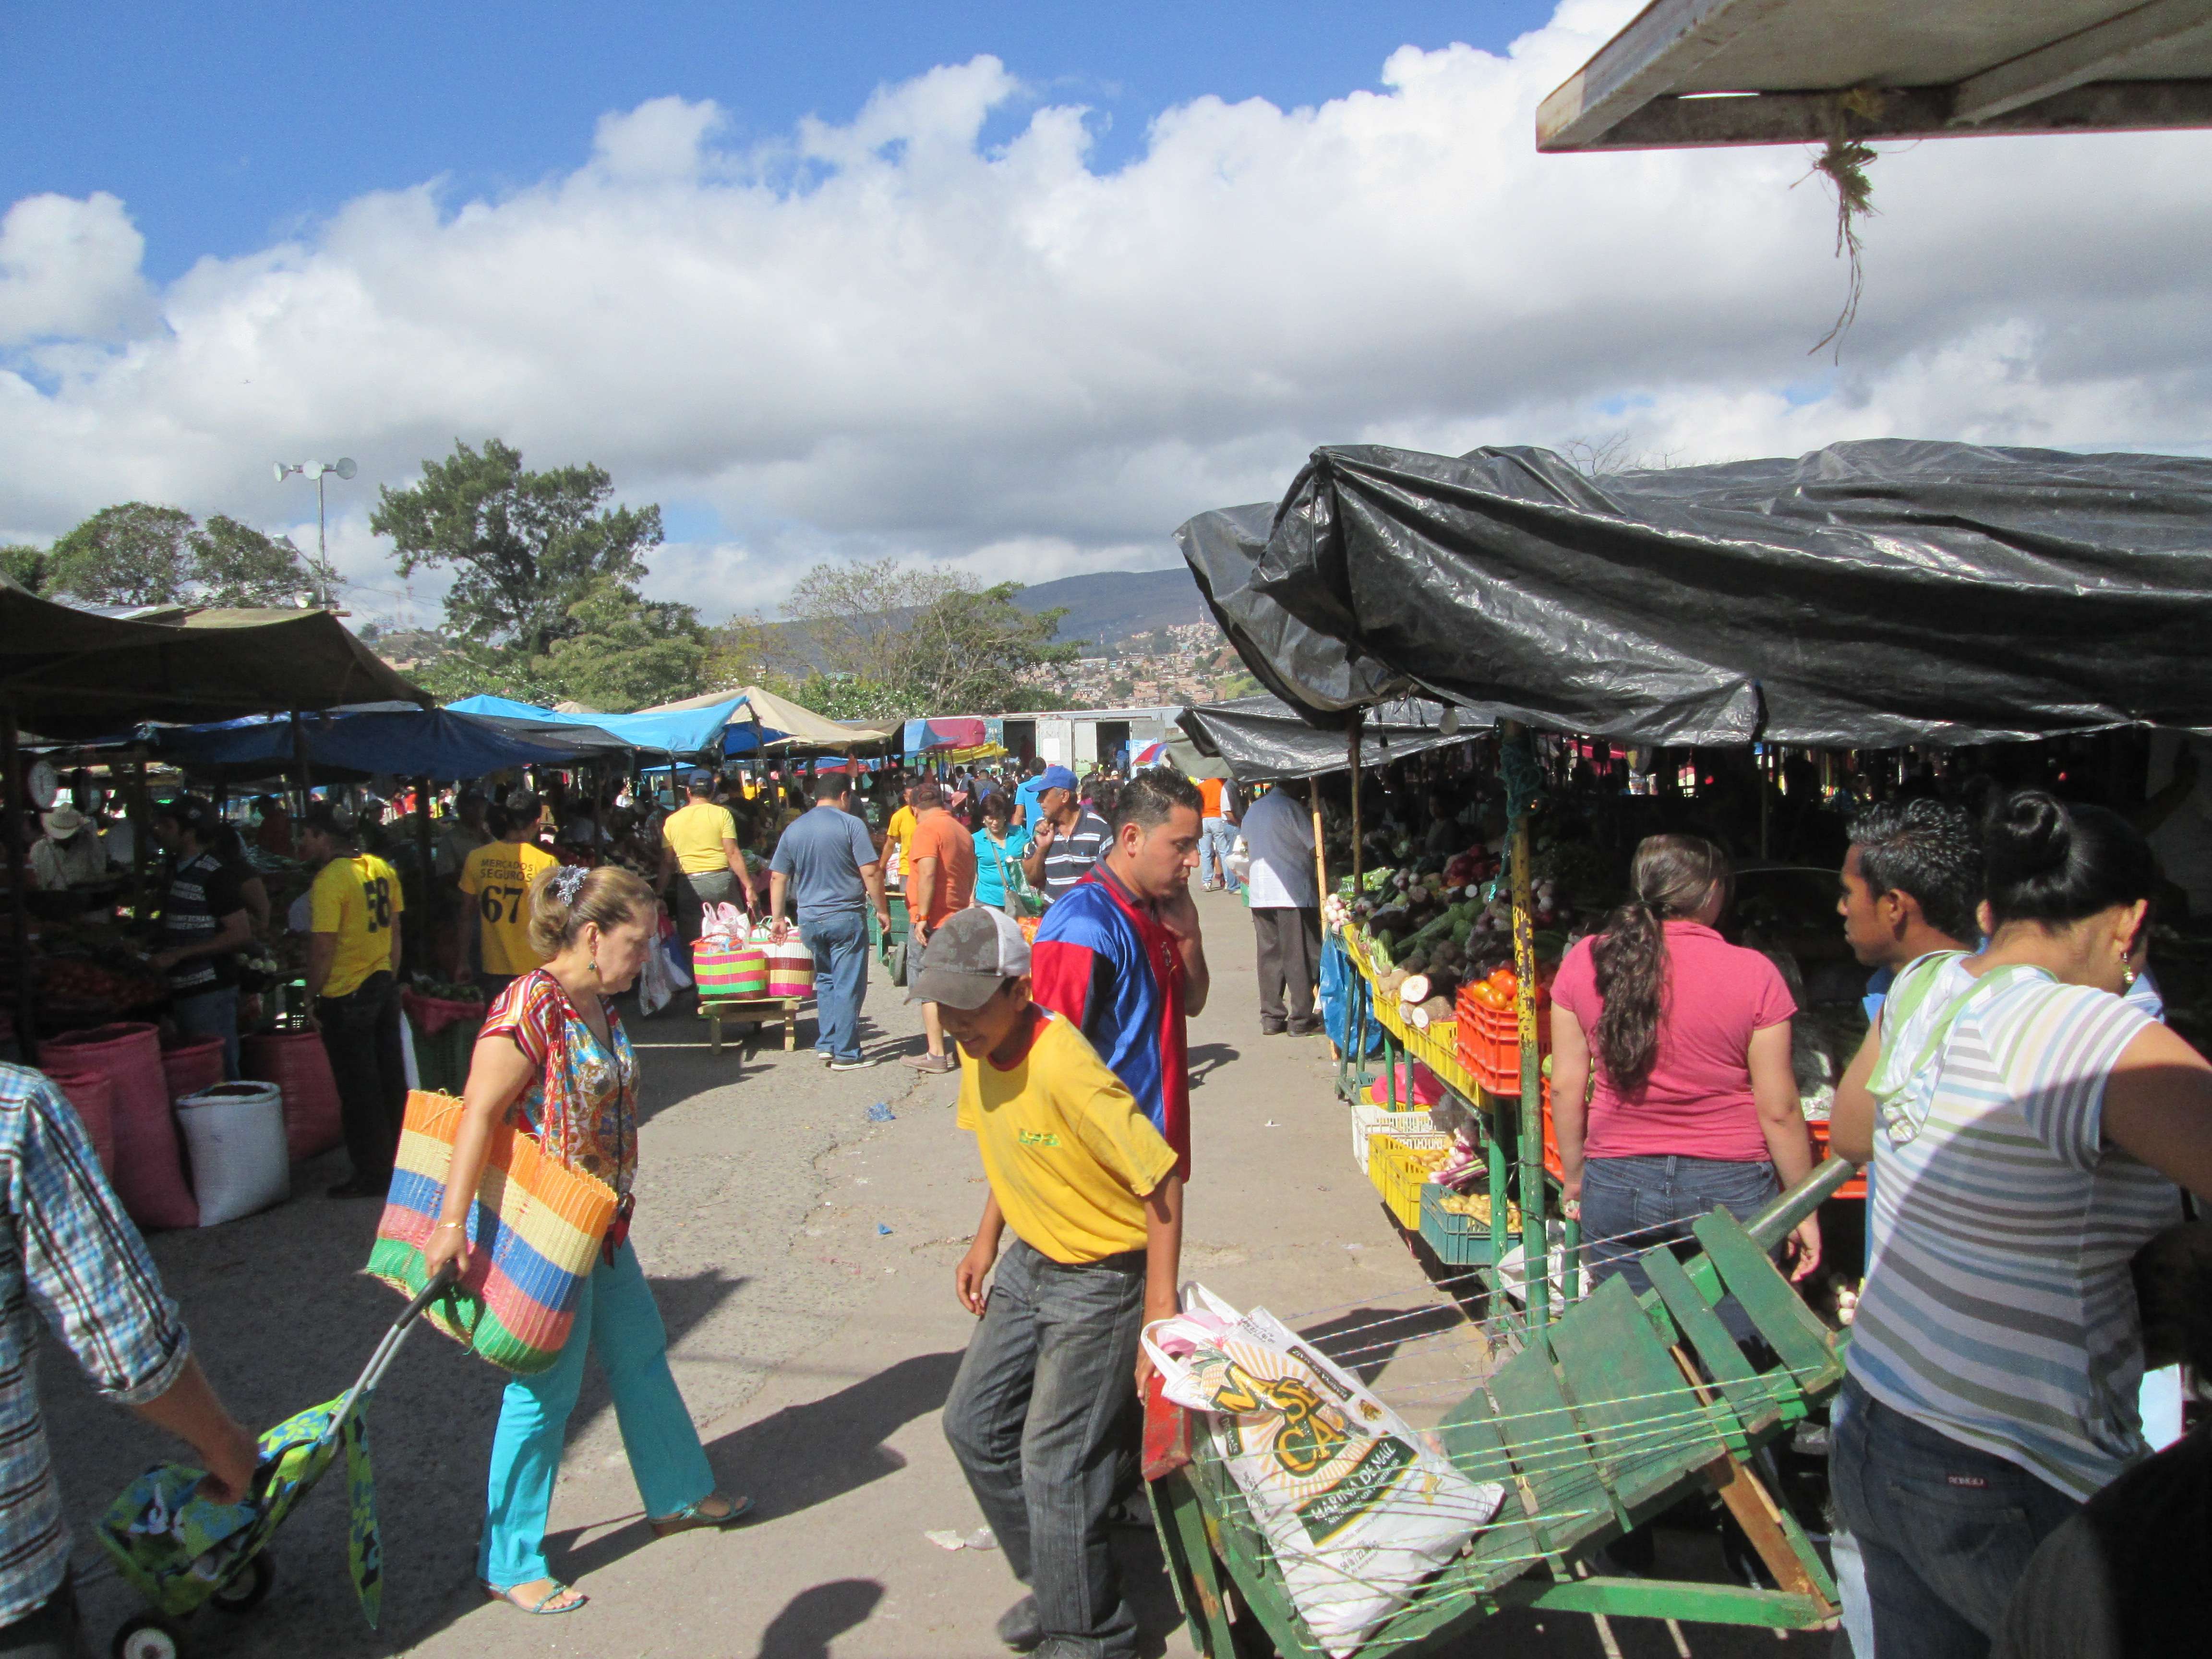 The market in Tegucigalpa